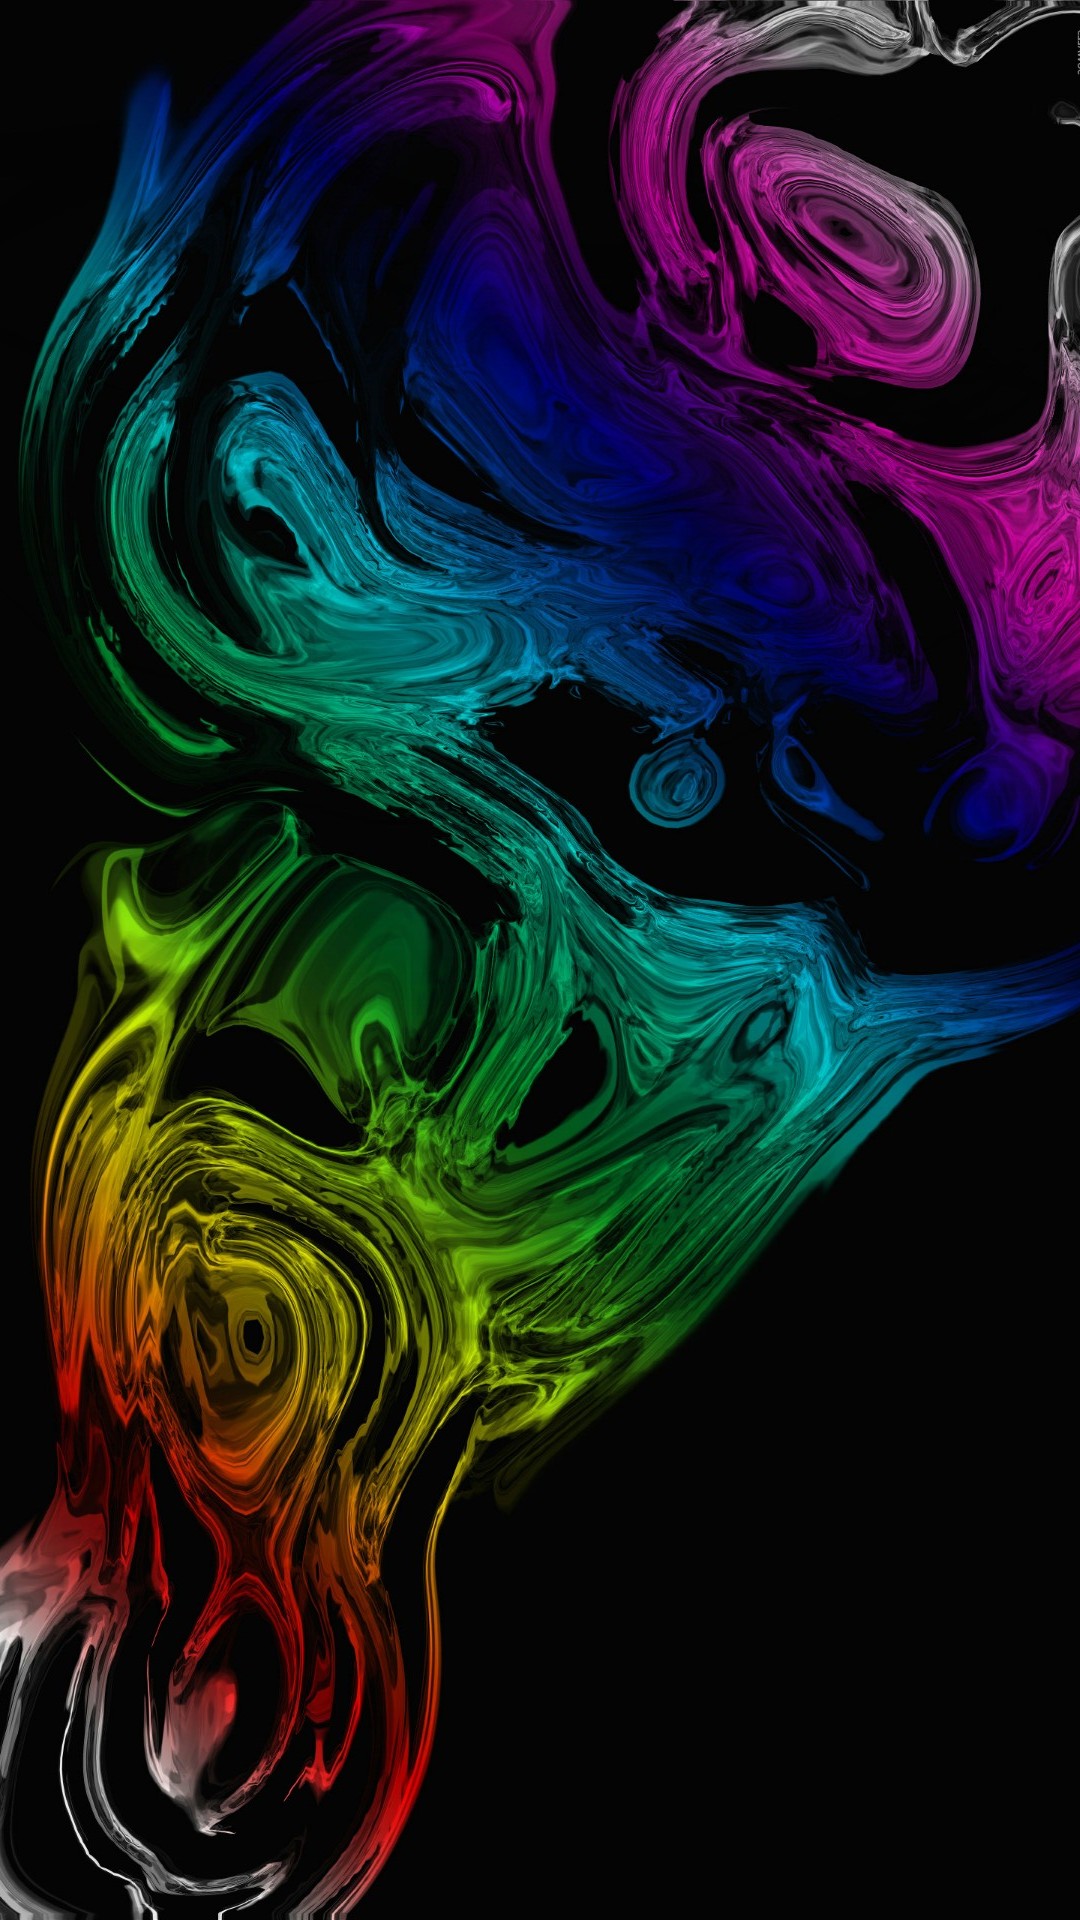 Rainbow Liquid iPhone Wallpaper resolution 1080x1920